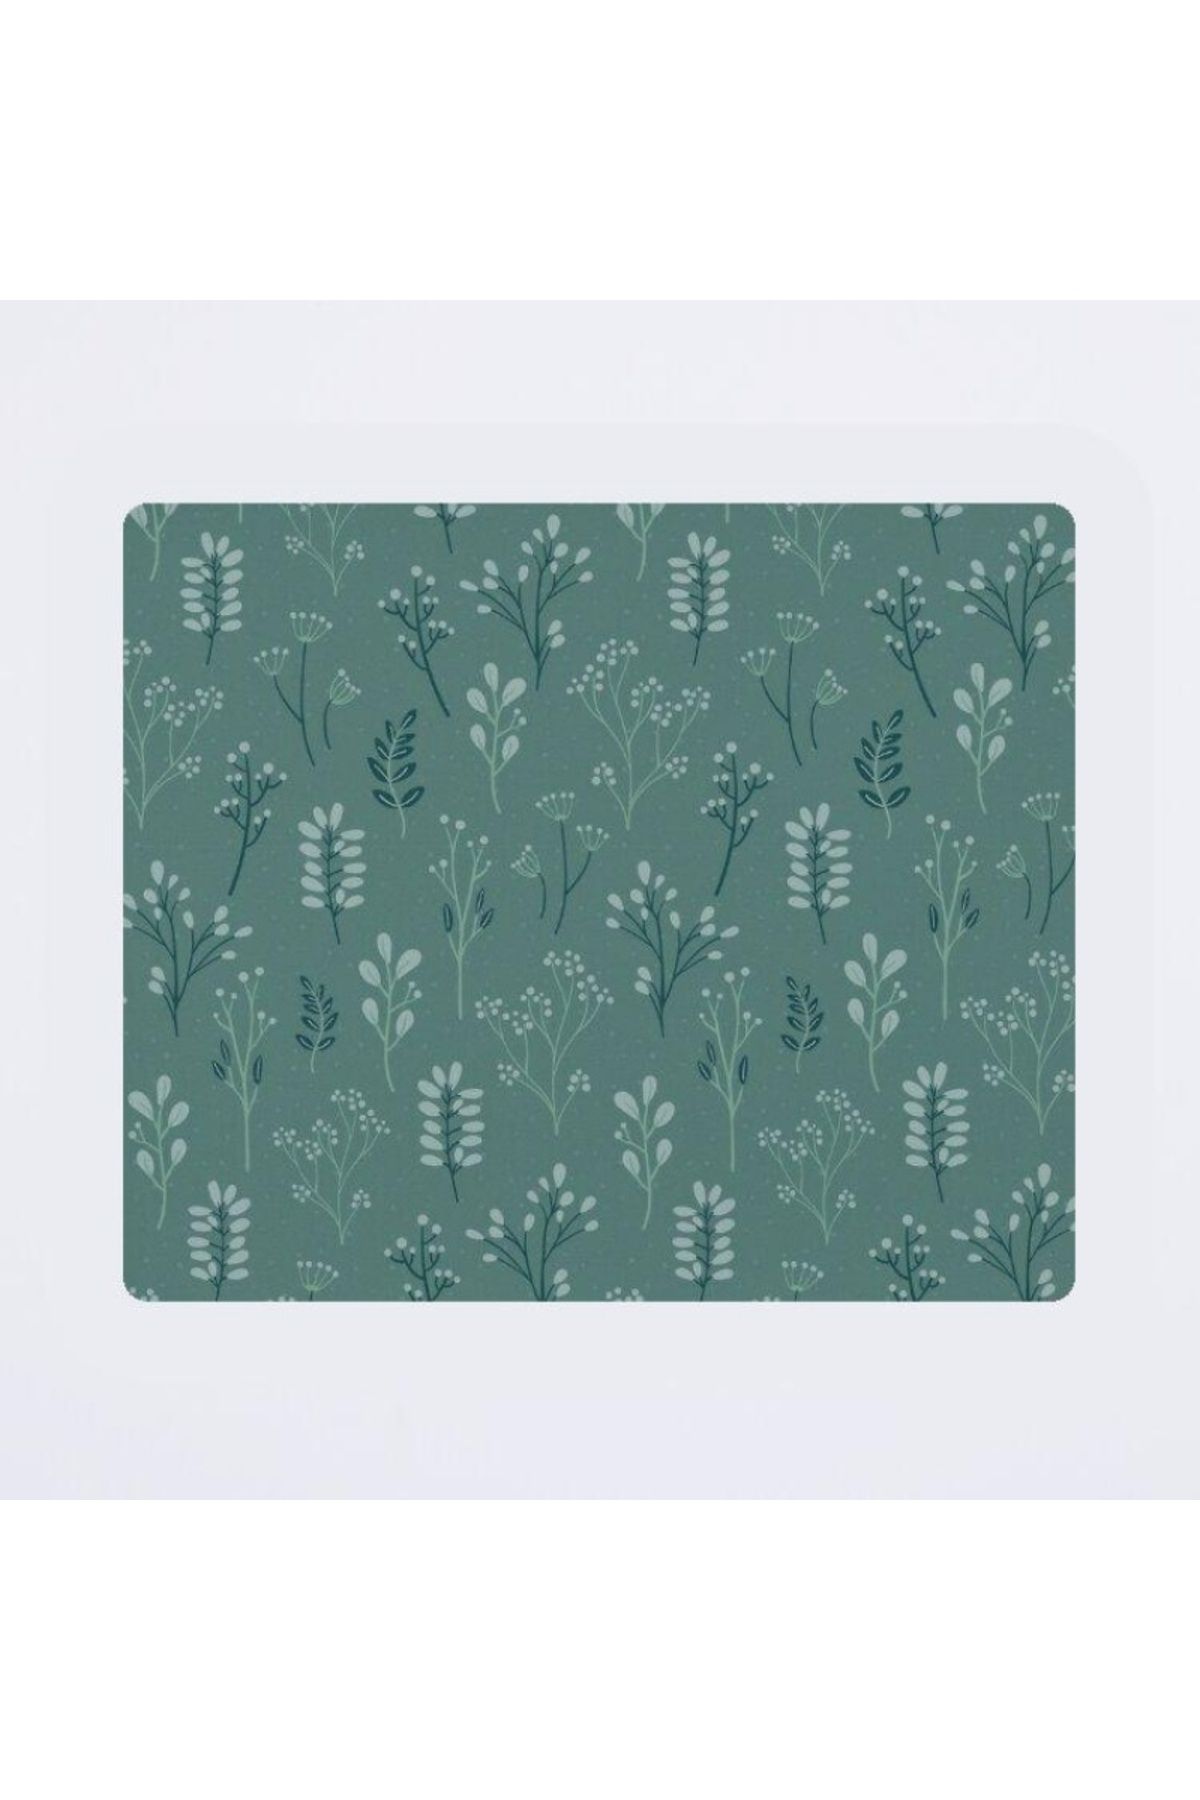 w house Baskılı Mouse pad 000060 18X22/2mm Teal & Green Botanical Garden Leaves Floral Print